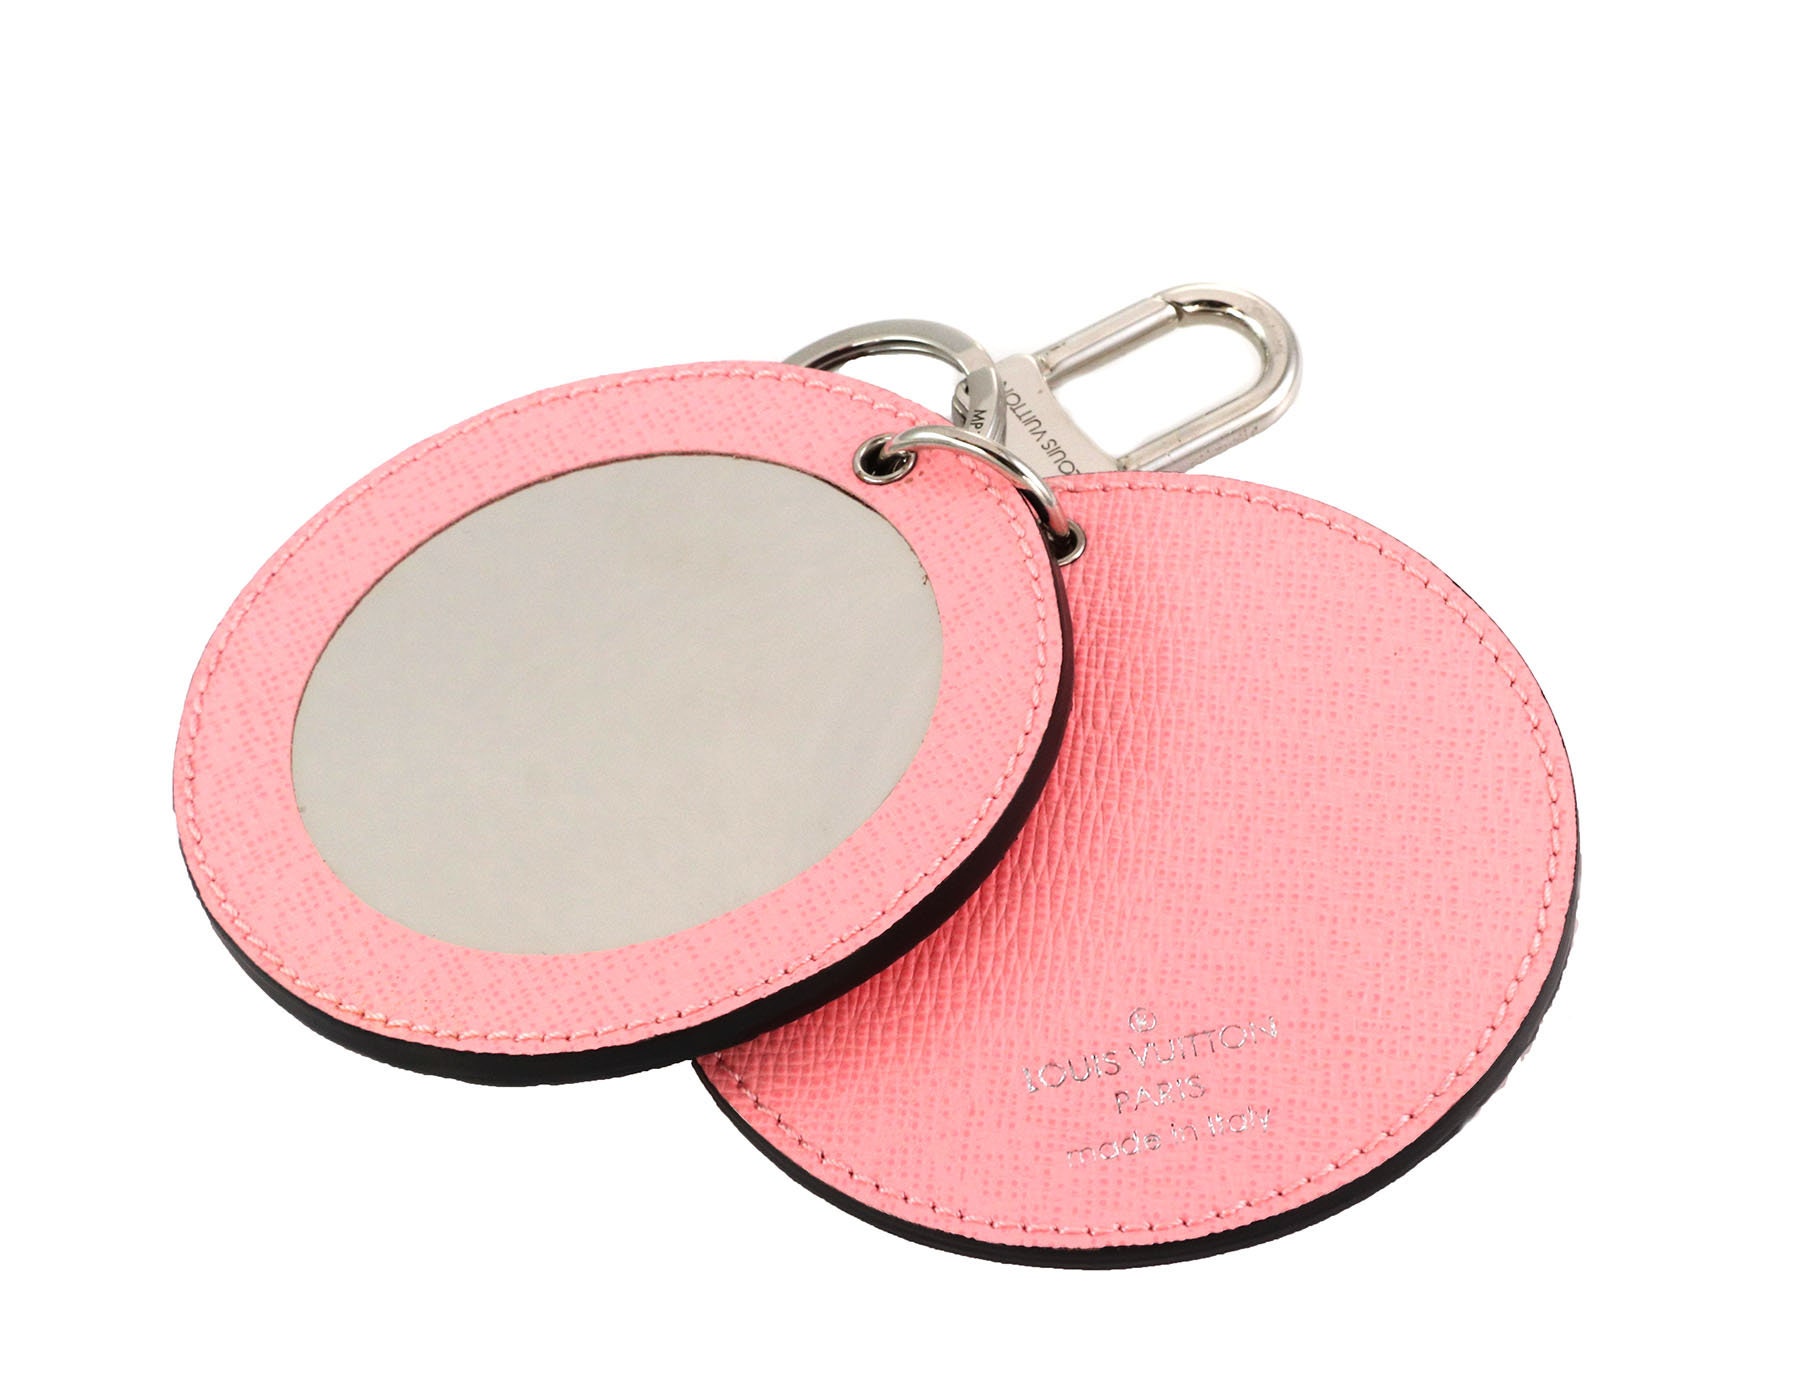 Louis Vuitton Mirror 2 Round Disc Pink & Black Floral Bag 